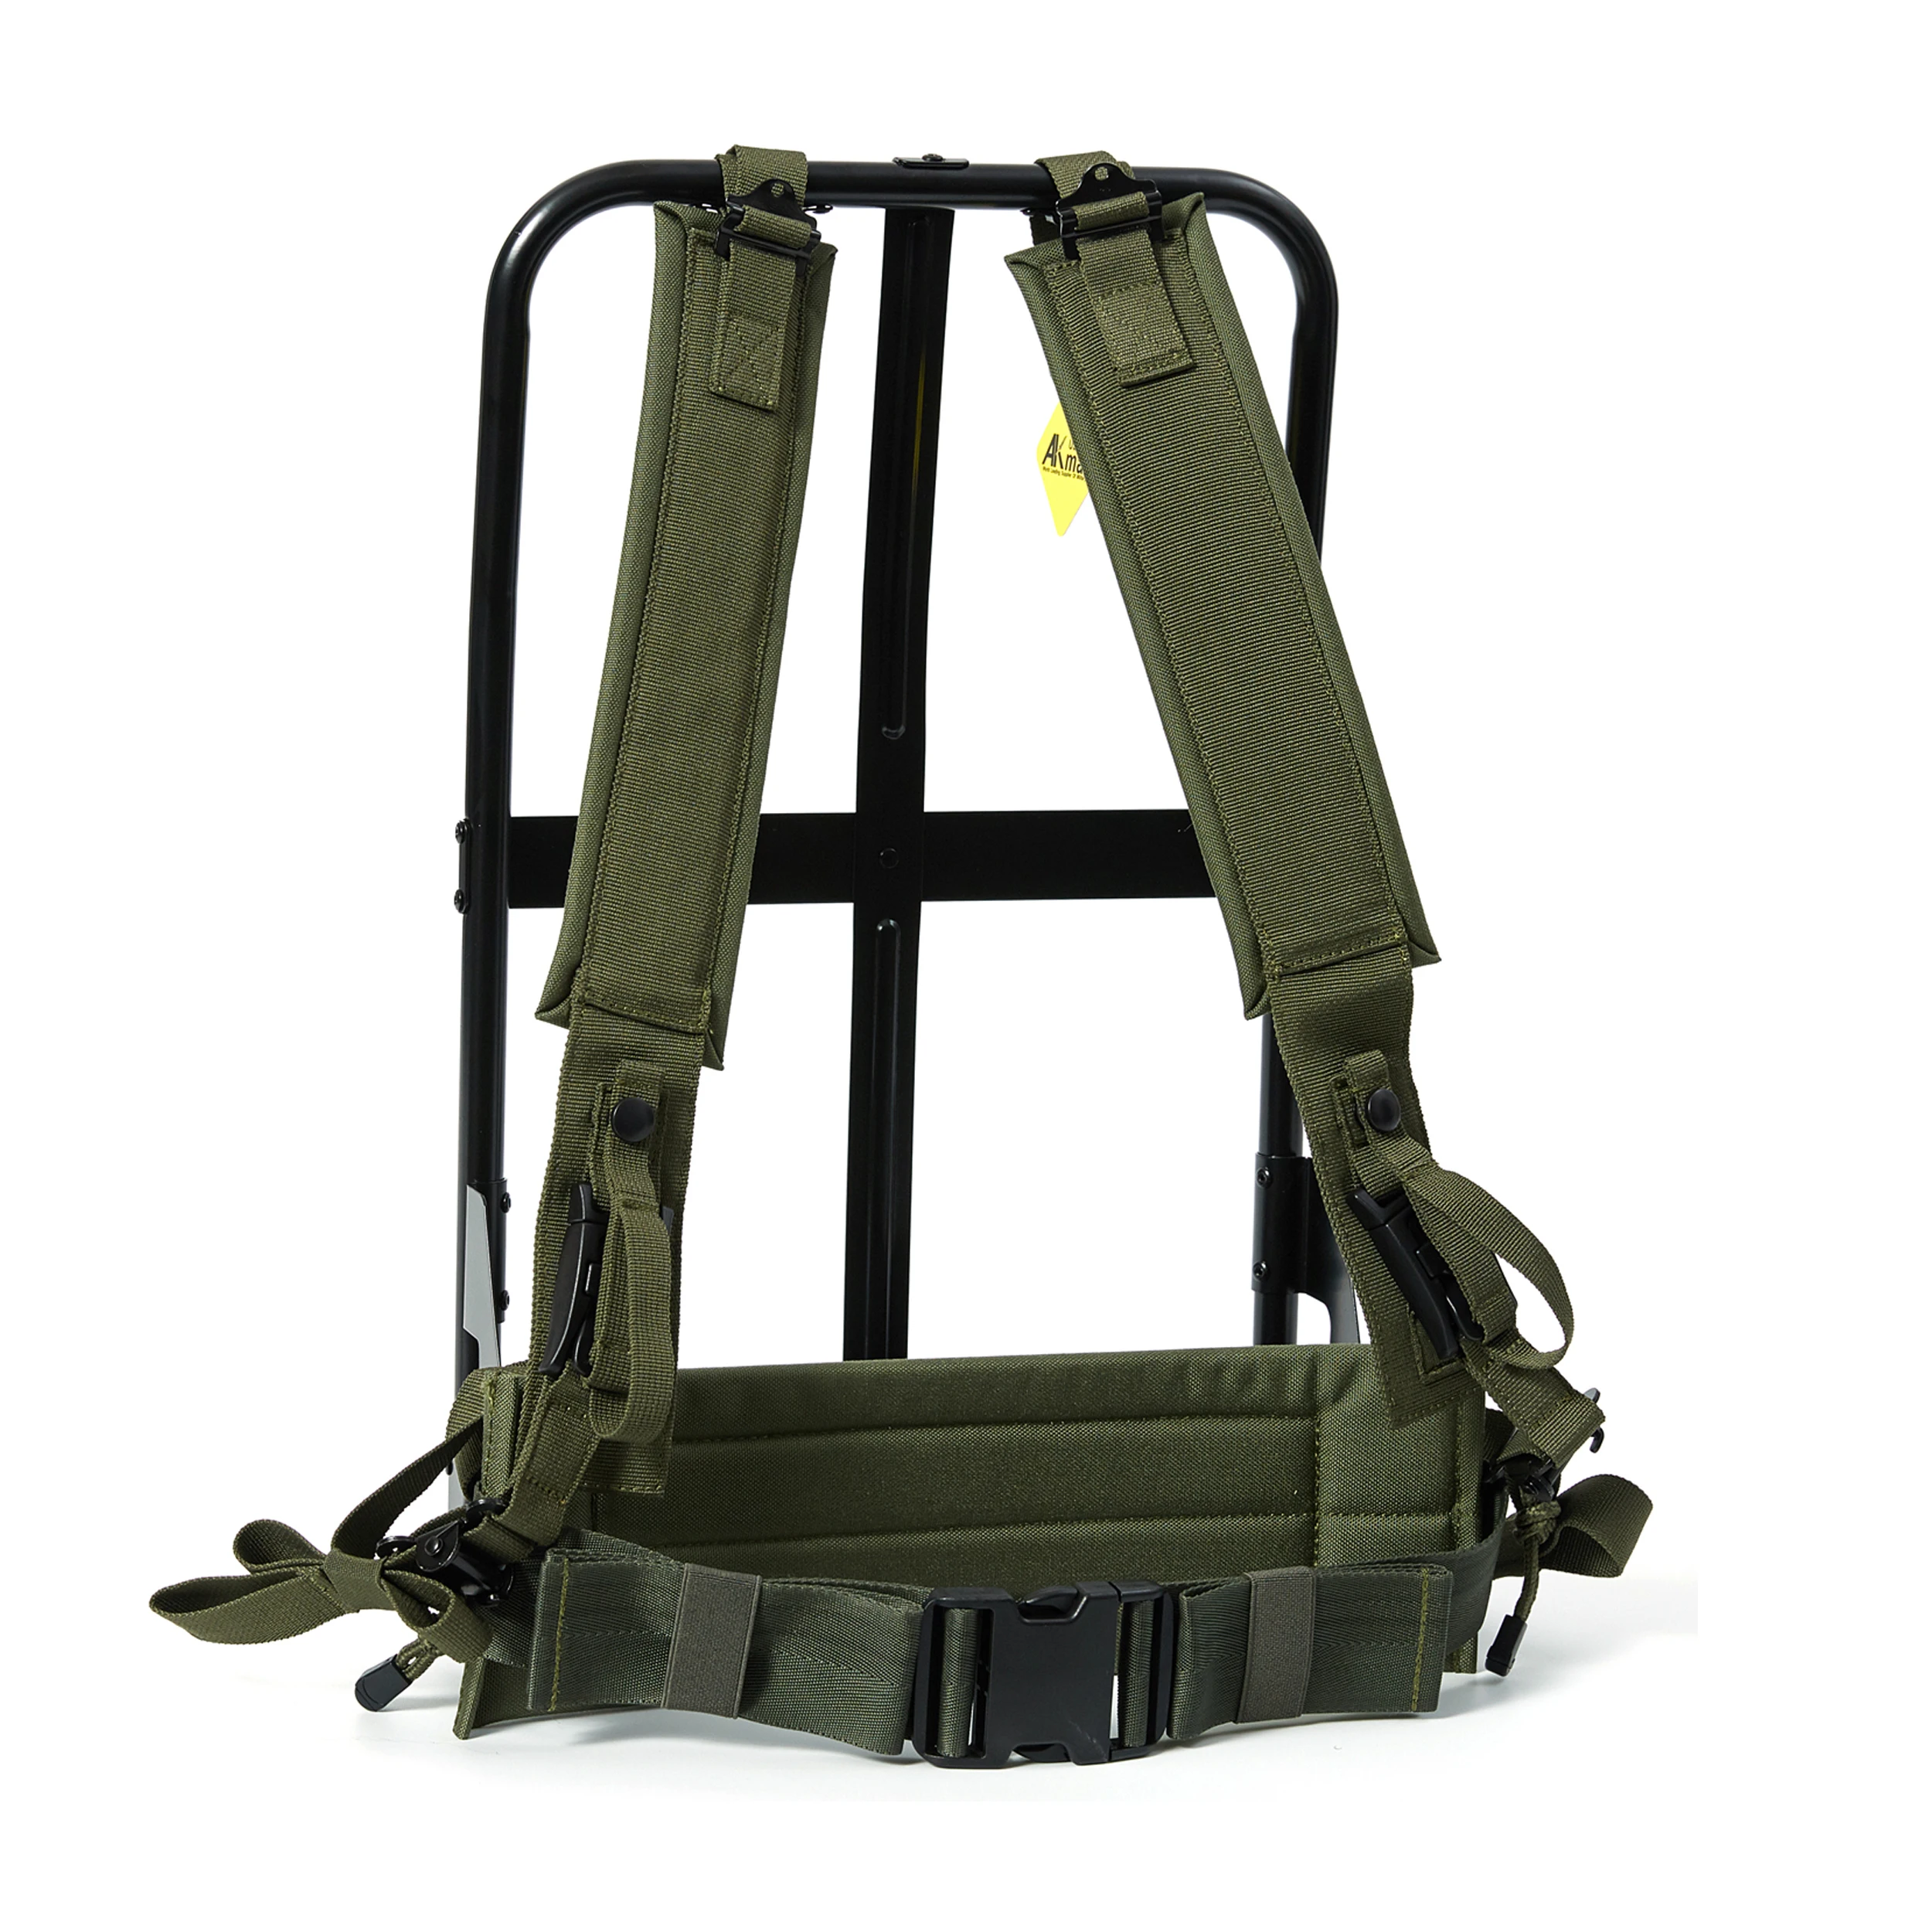 MT ALICE Pack Aluminum Frame With Waist Belt&Kidney Pad Multicam Camouflage Backpack frame Tactical backpack Man‘s Bag Army